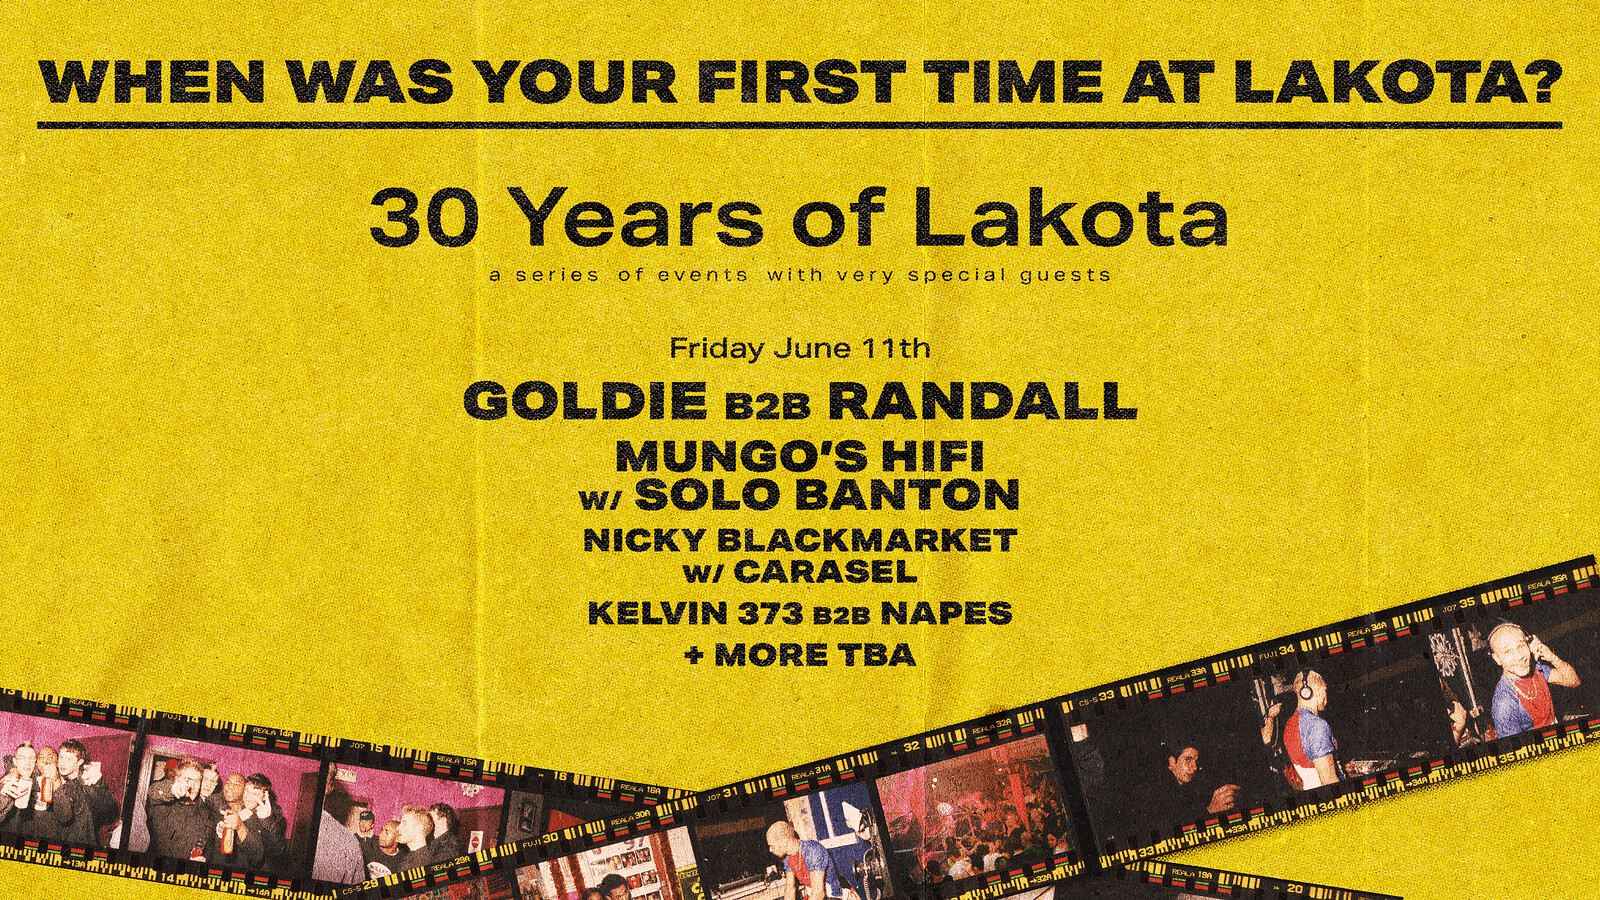 Lakota's 30th Birthday - Goldie b2b Randall at Lakota